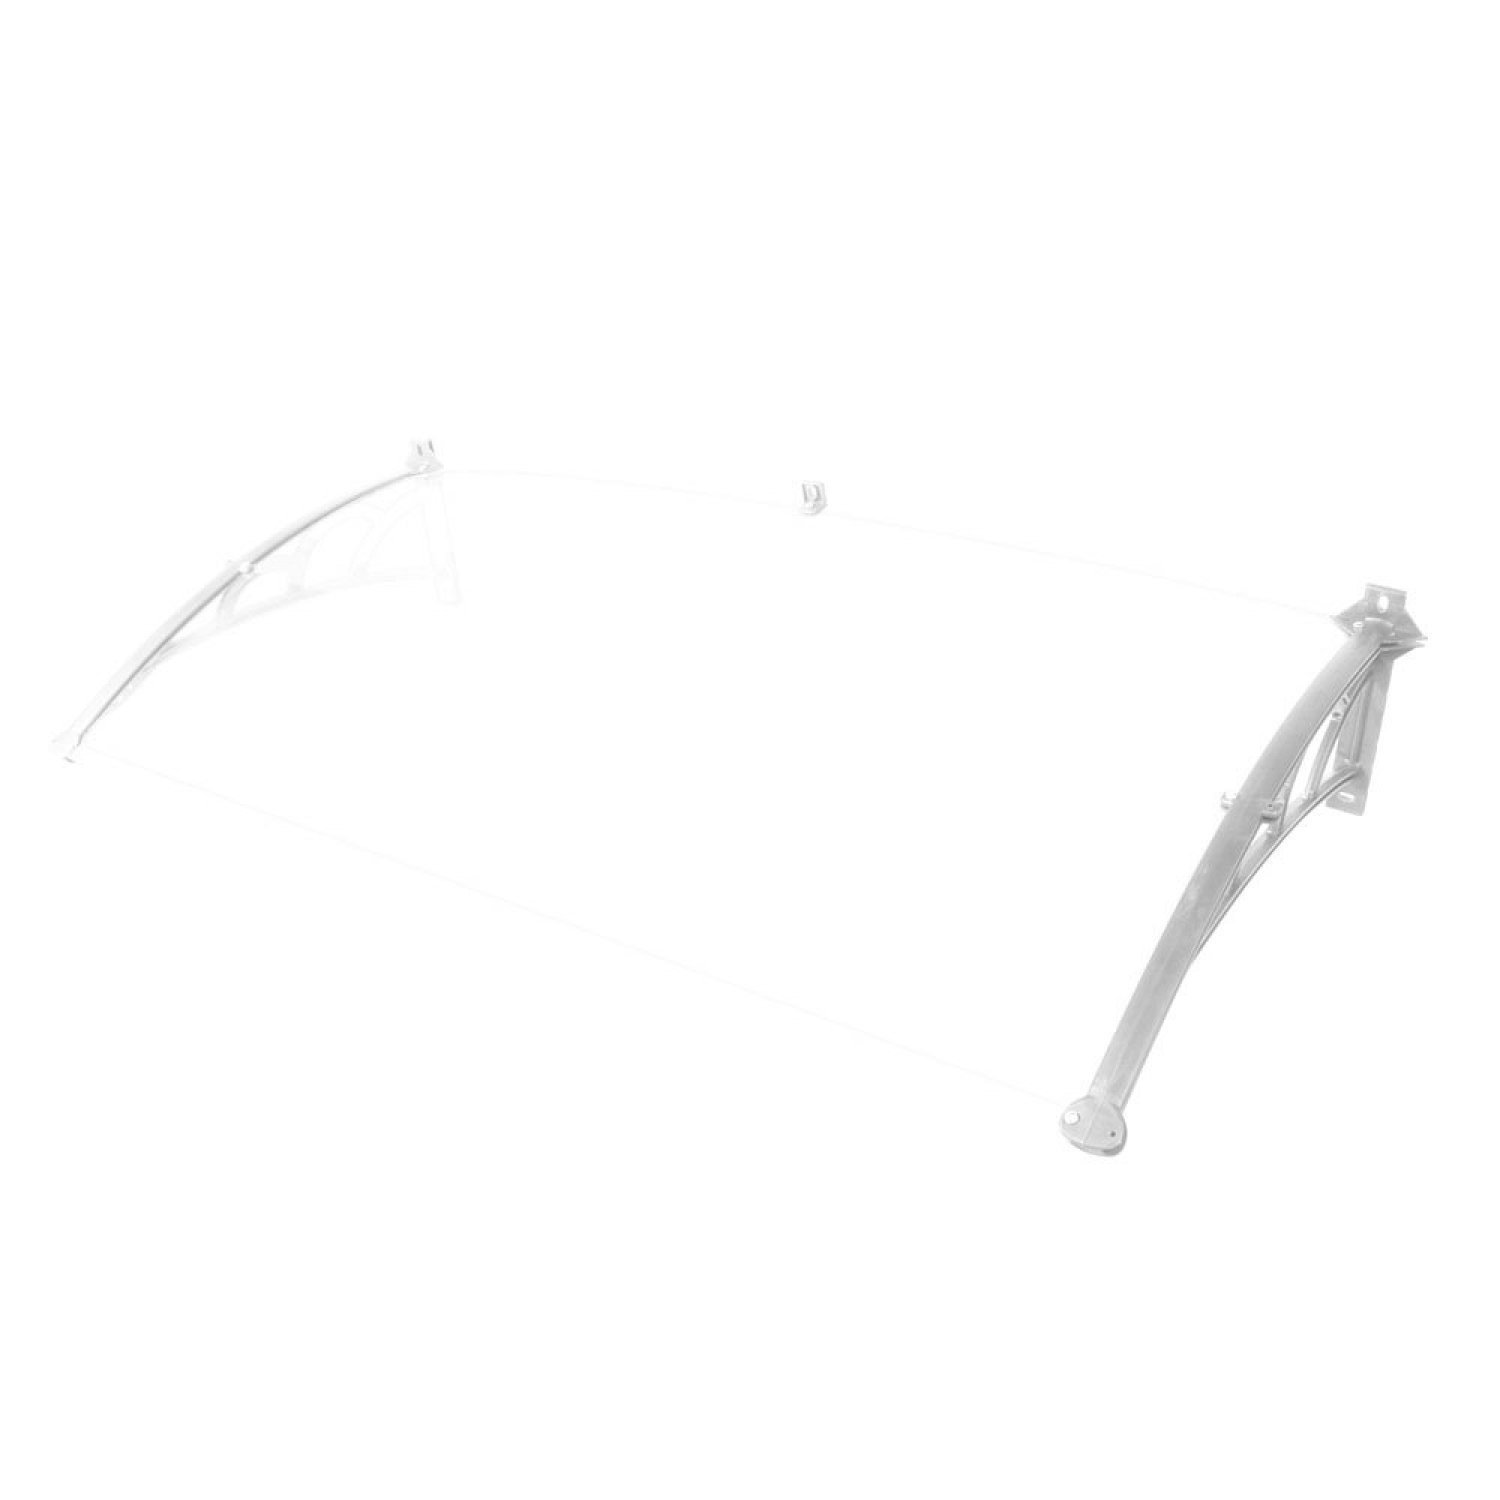 Toldo Versátil 120x60cm Braço Branco com Chapa Cristal - 2